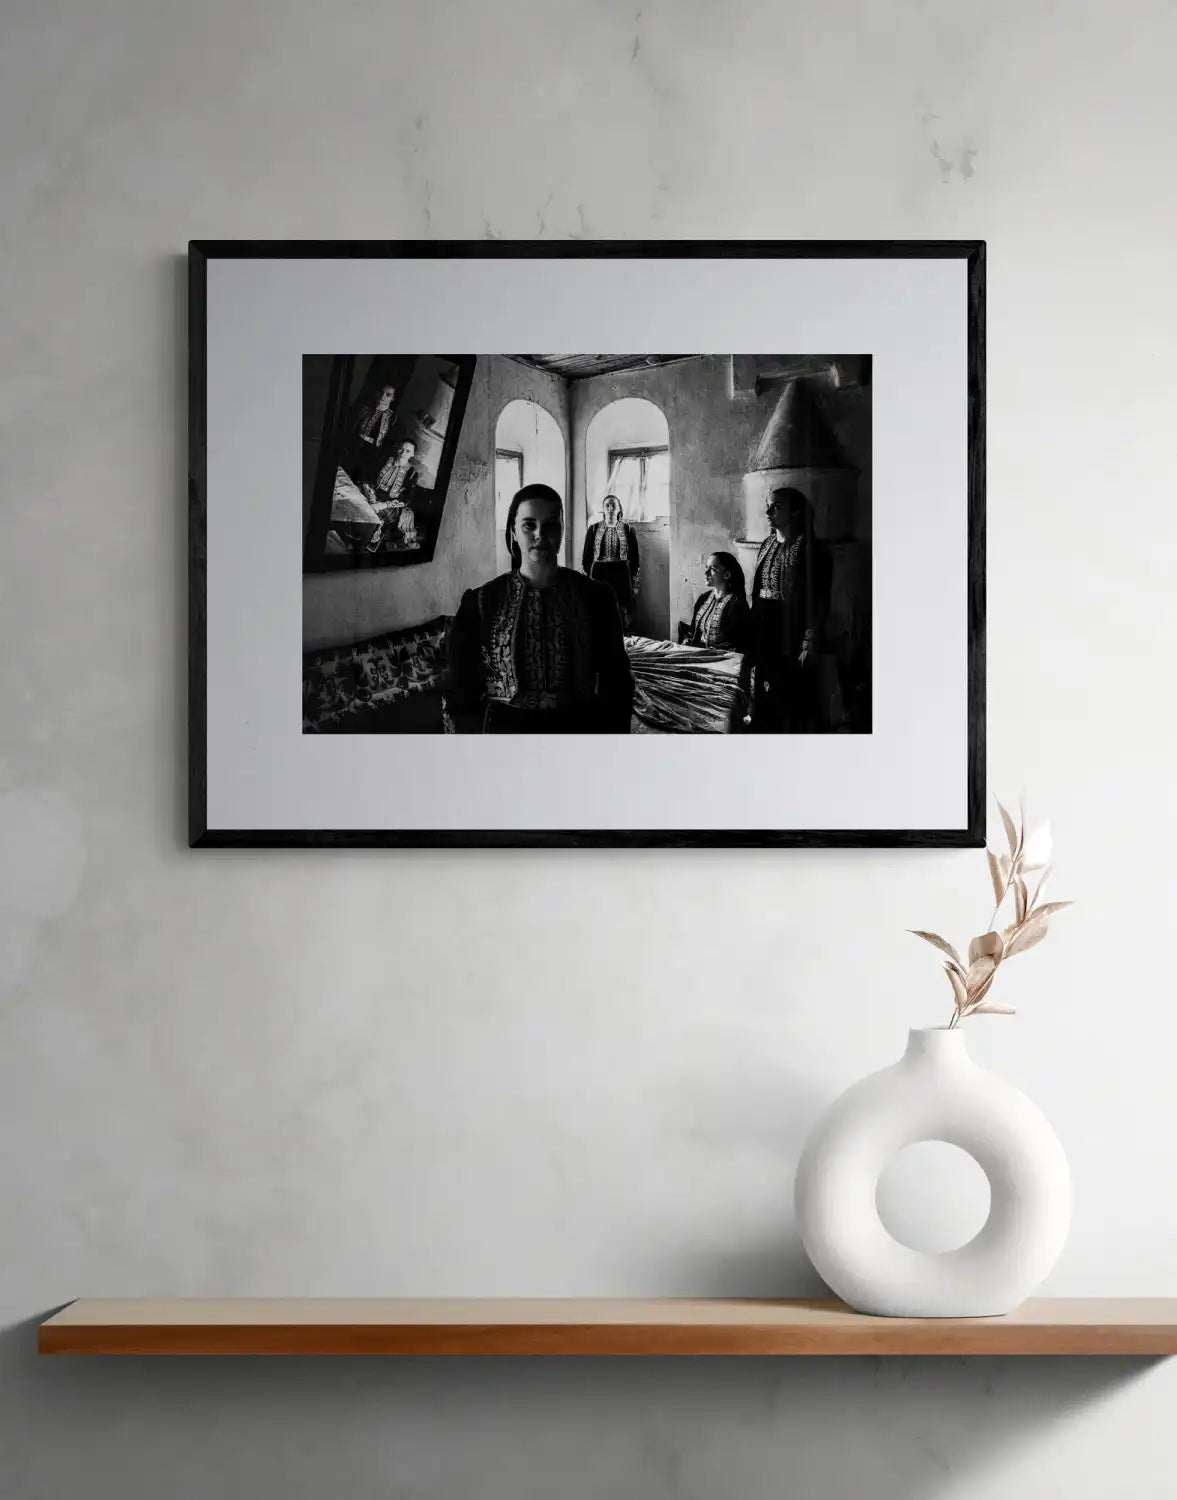 Filiates, Thesprotia, Epirus, Greece | Mirrored Portraits | Black-and-White Wall Art Photography - single print framed